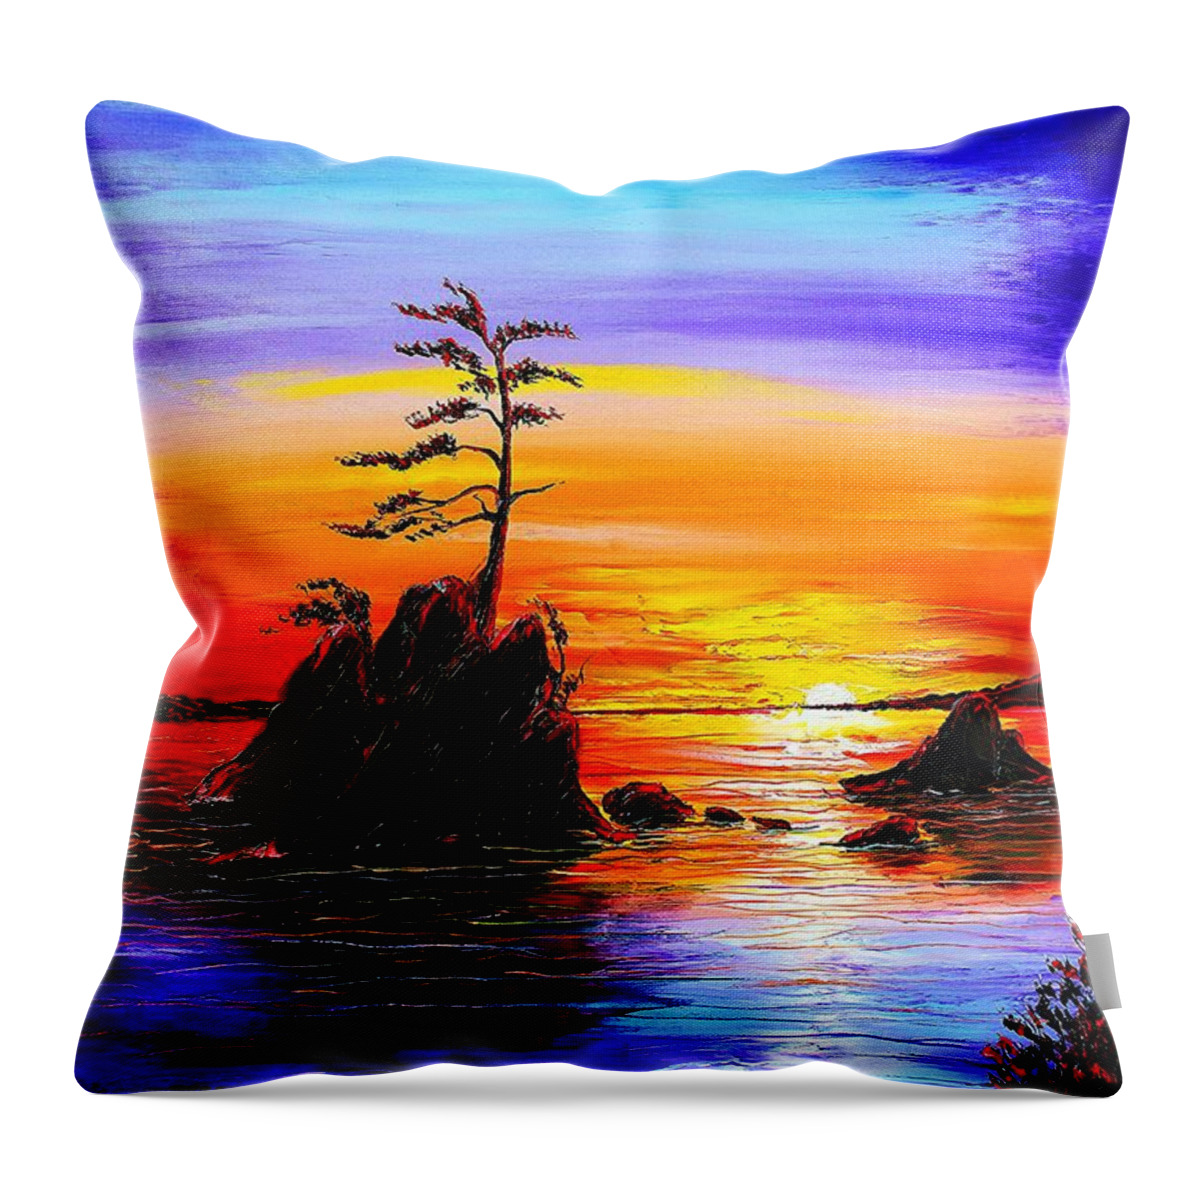  Throw Pillow featuring the painting Garibaldi Beach At Sunset #7 by James Dunbar